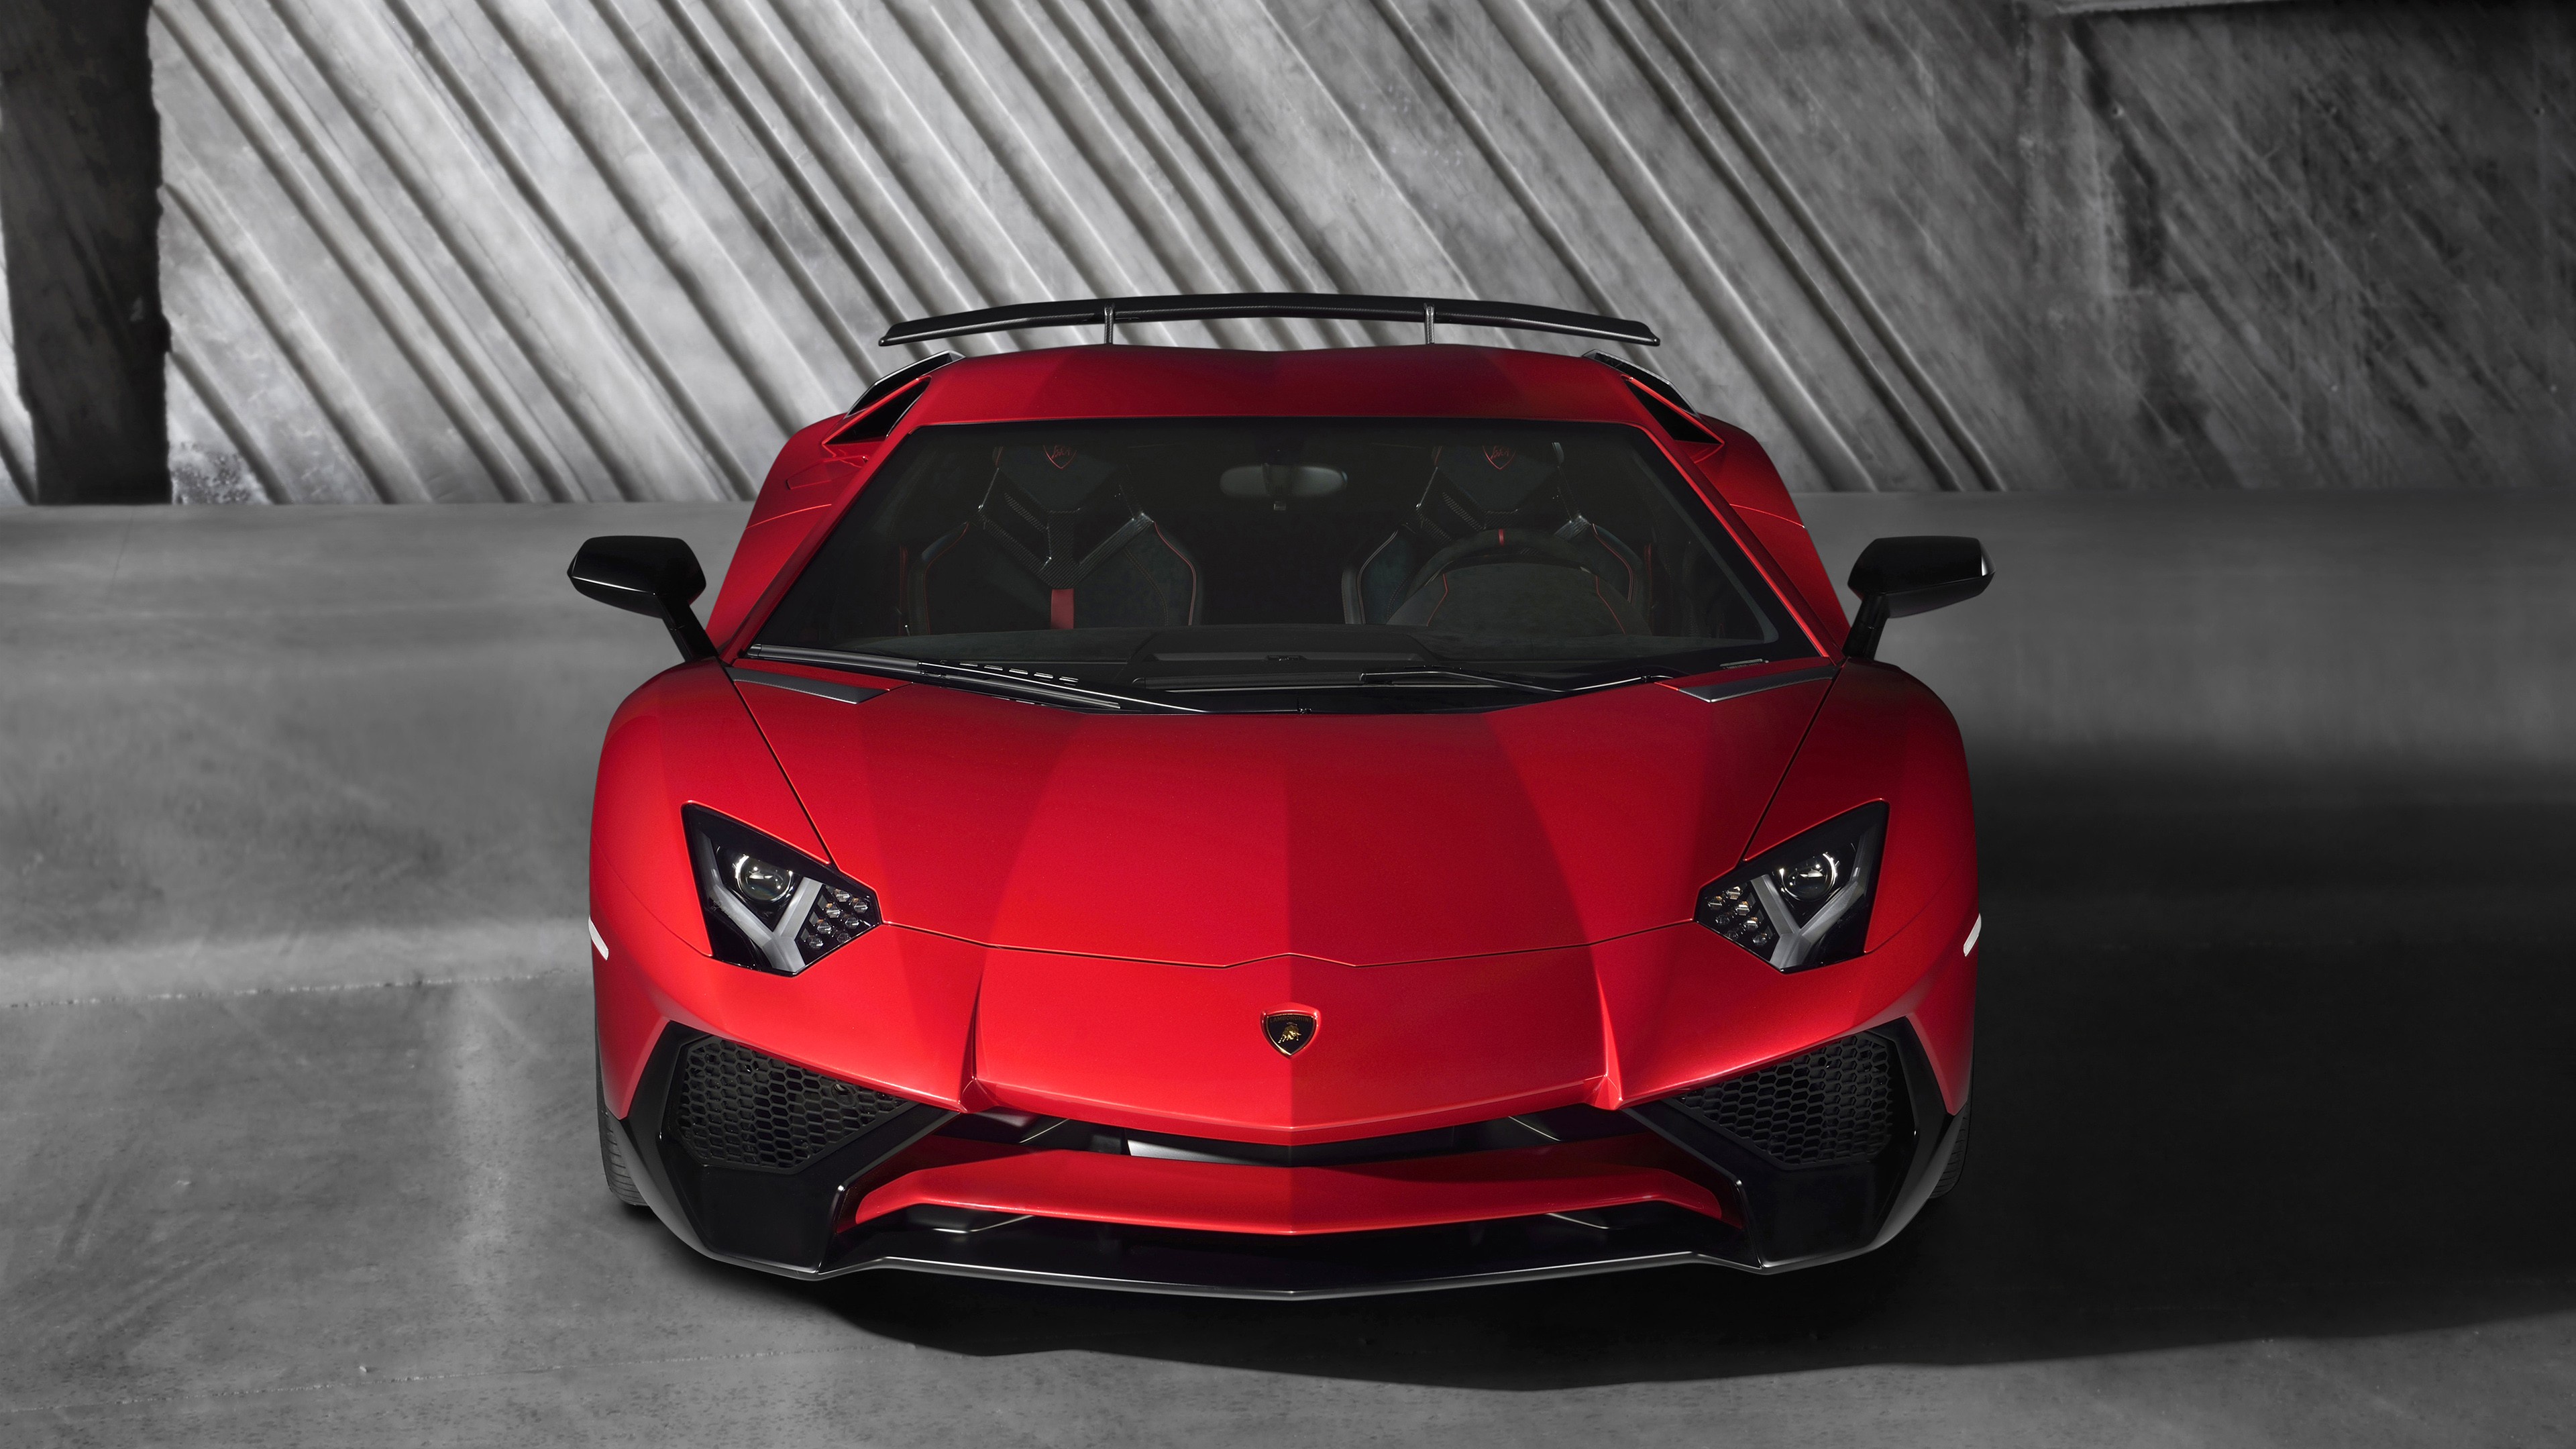 Lamborghini - fond d'écran 4K.jpg